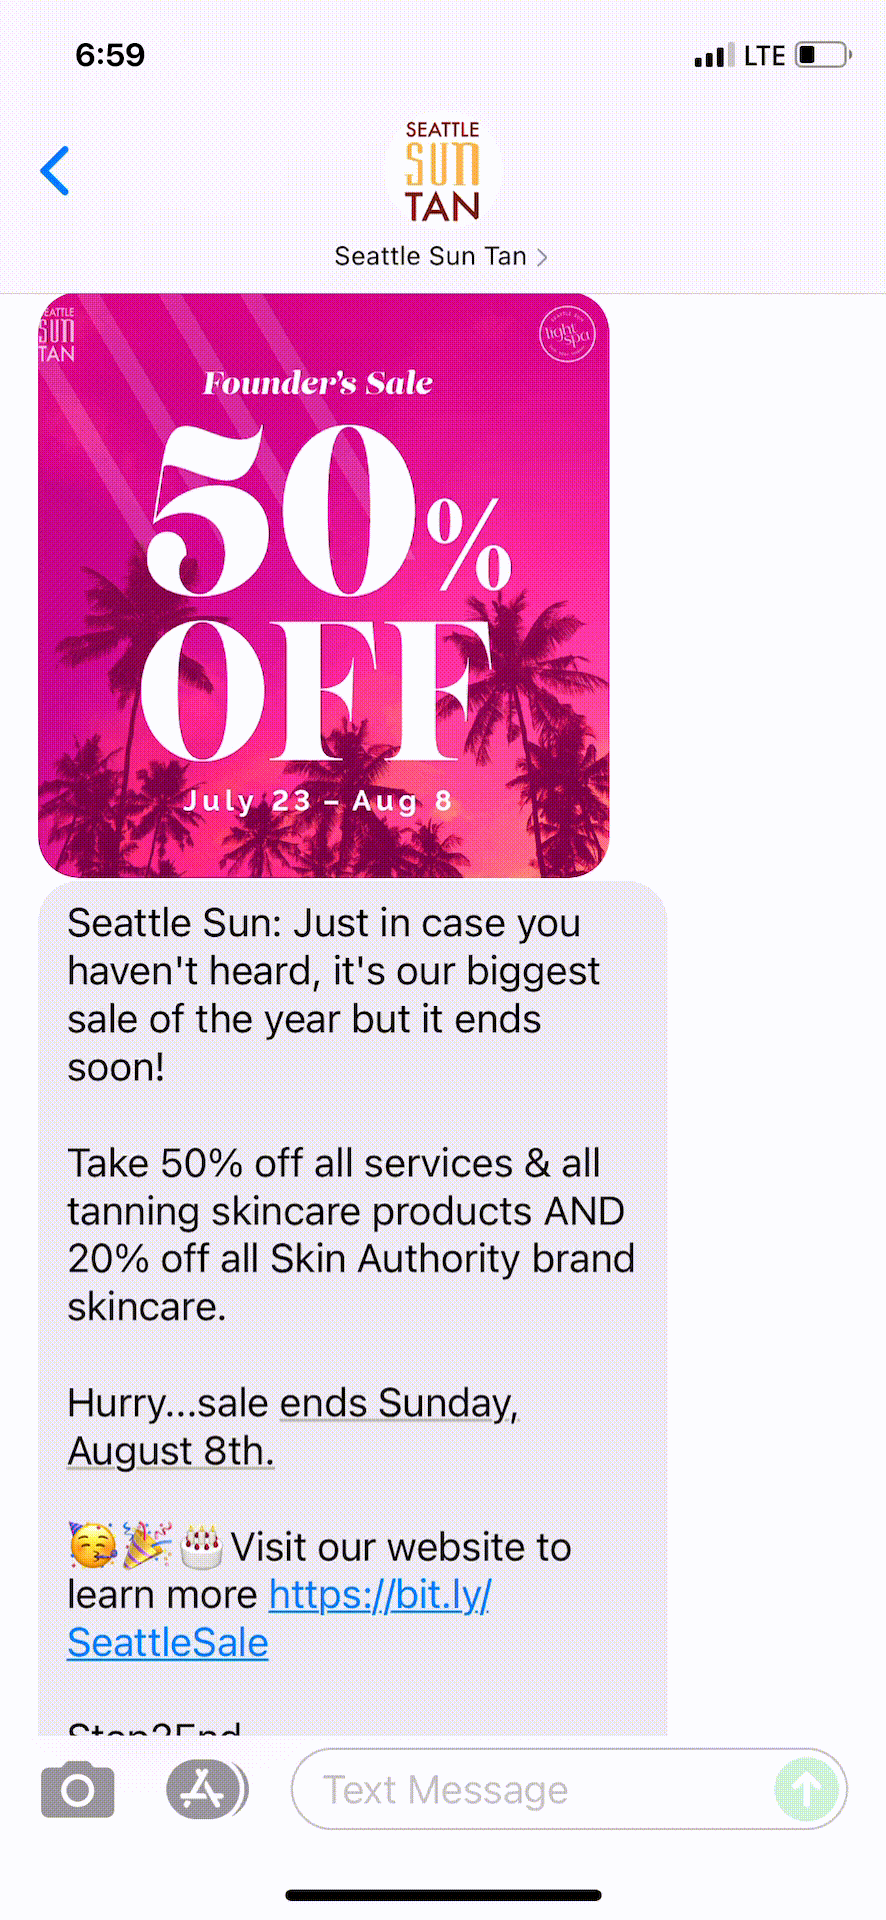 Seattle-Sun-Tan-Text-Message-Marketing-Example-08.04.2021